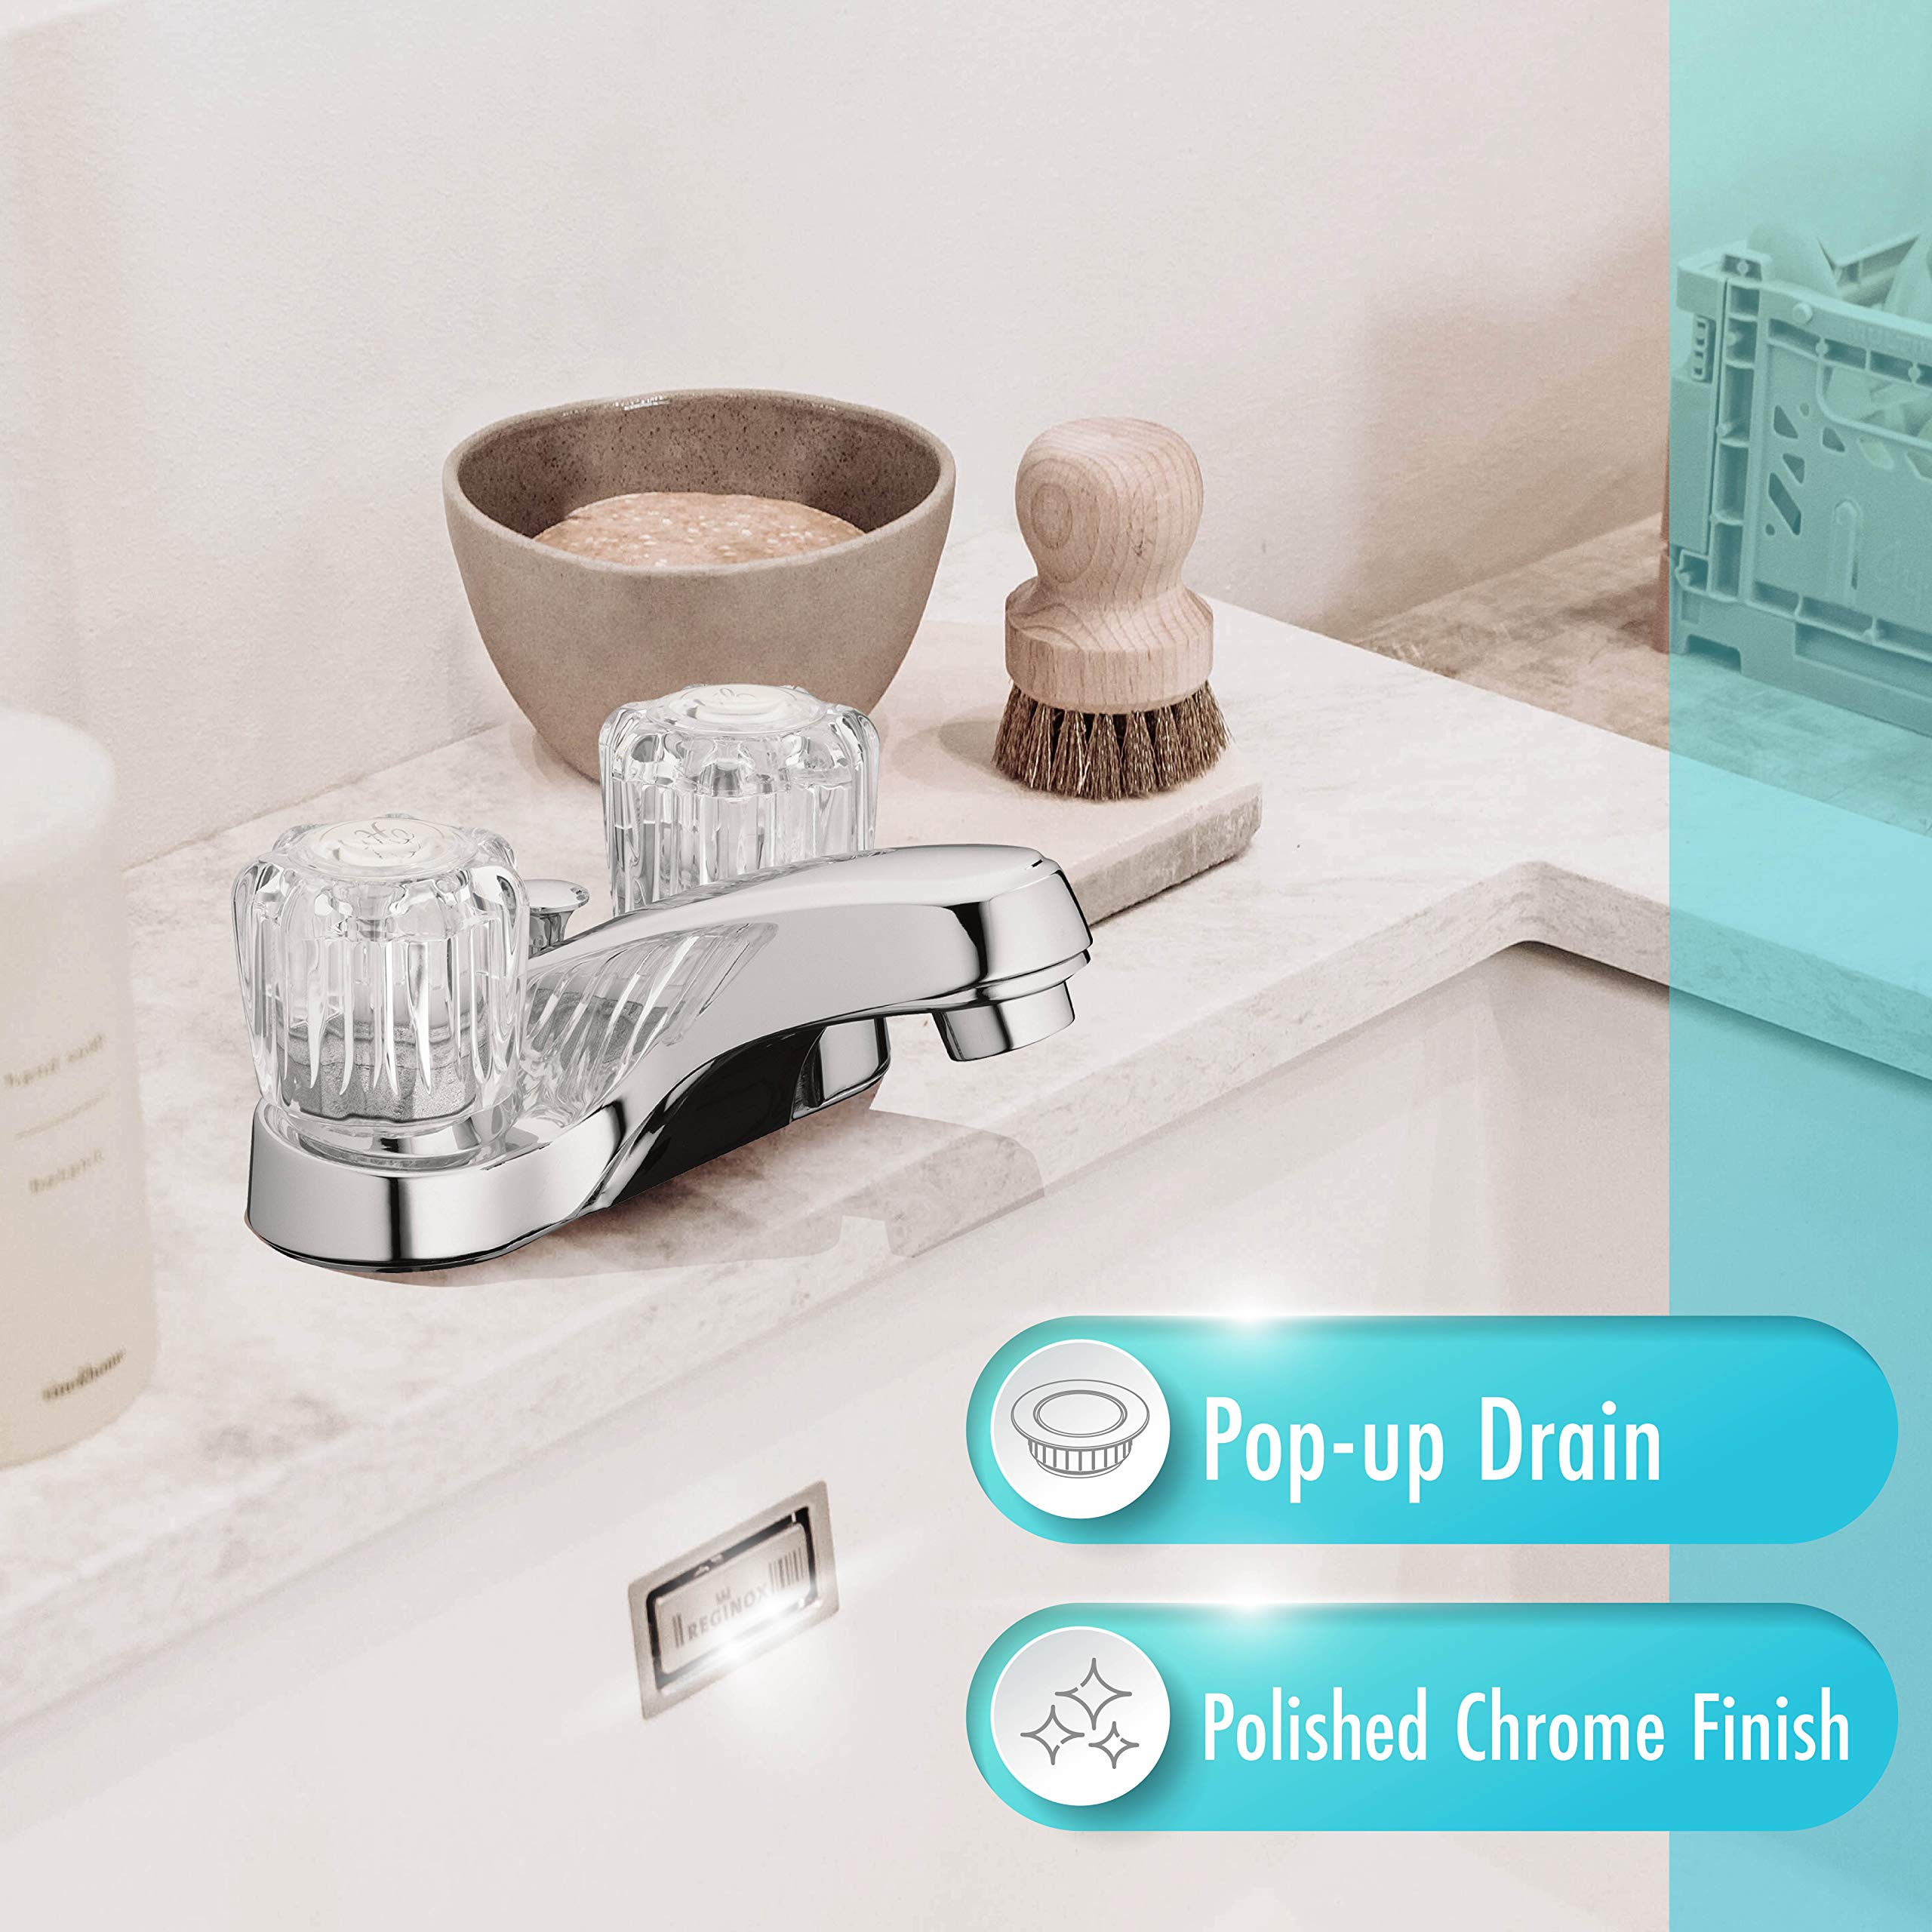 Aqua Vista 10-B421-AV Two Handle Bathroom Sink Faucet, Polished Chrome with Acrylic Round Knobs